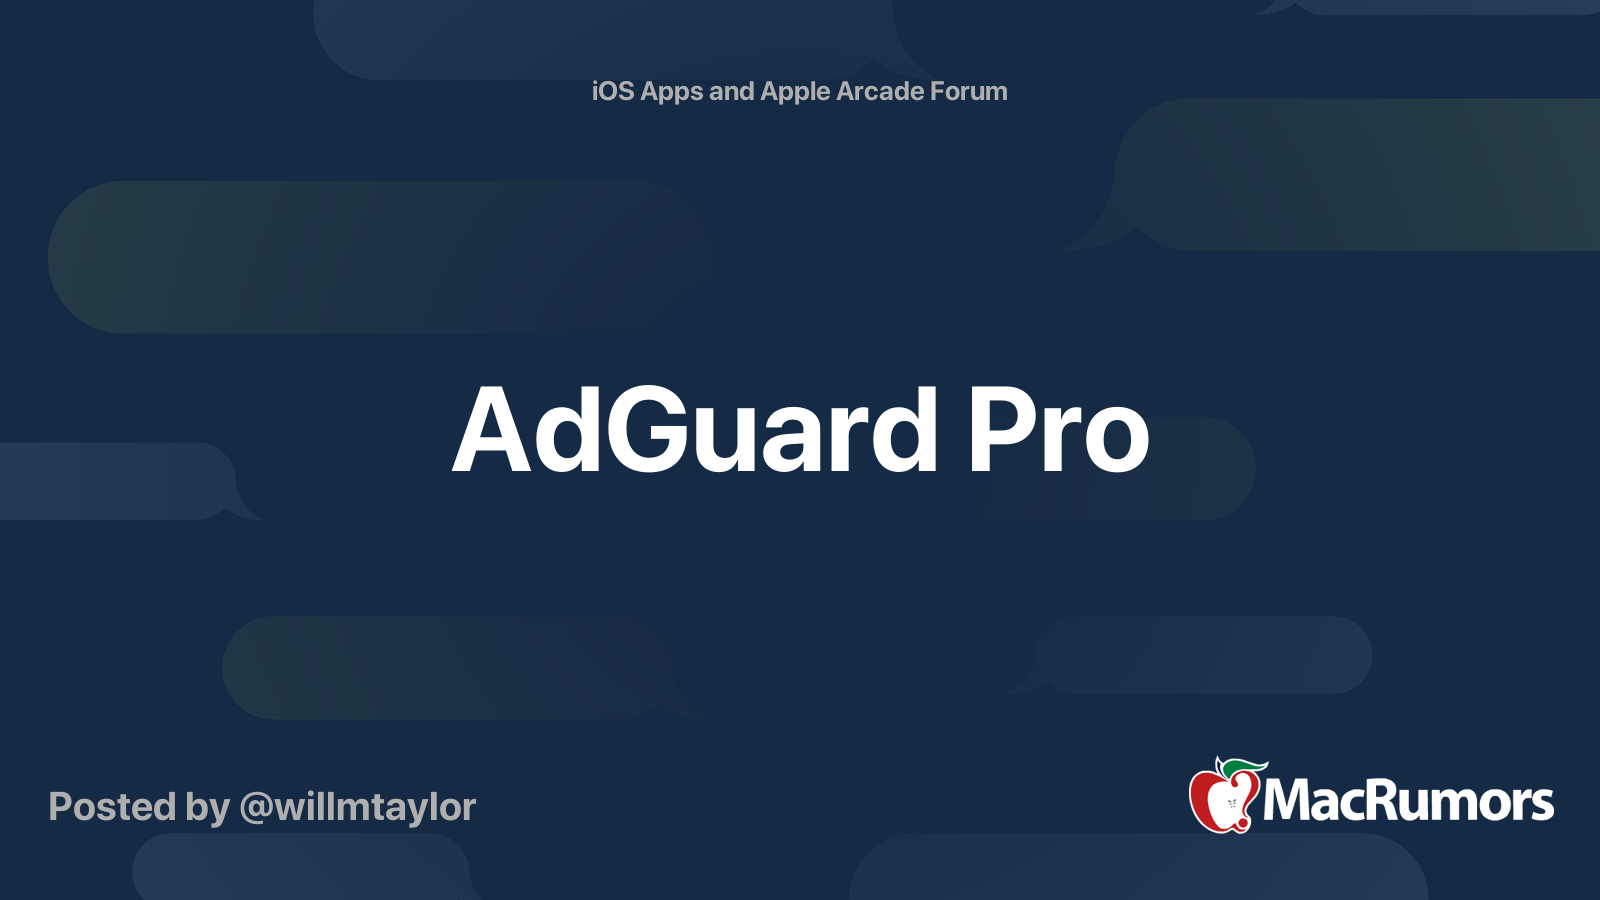 adguard pro forum